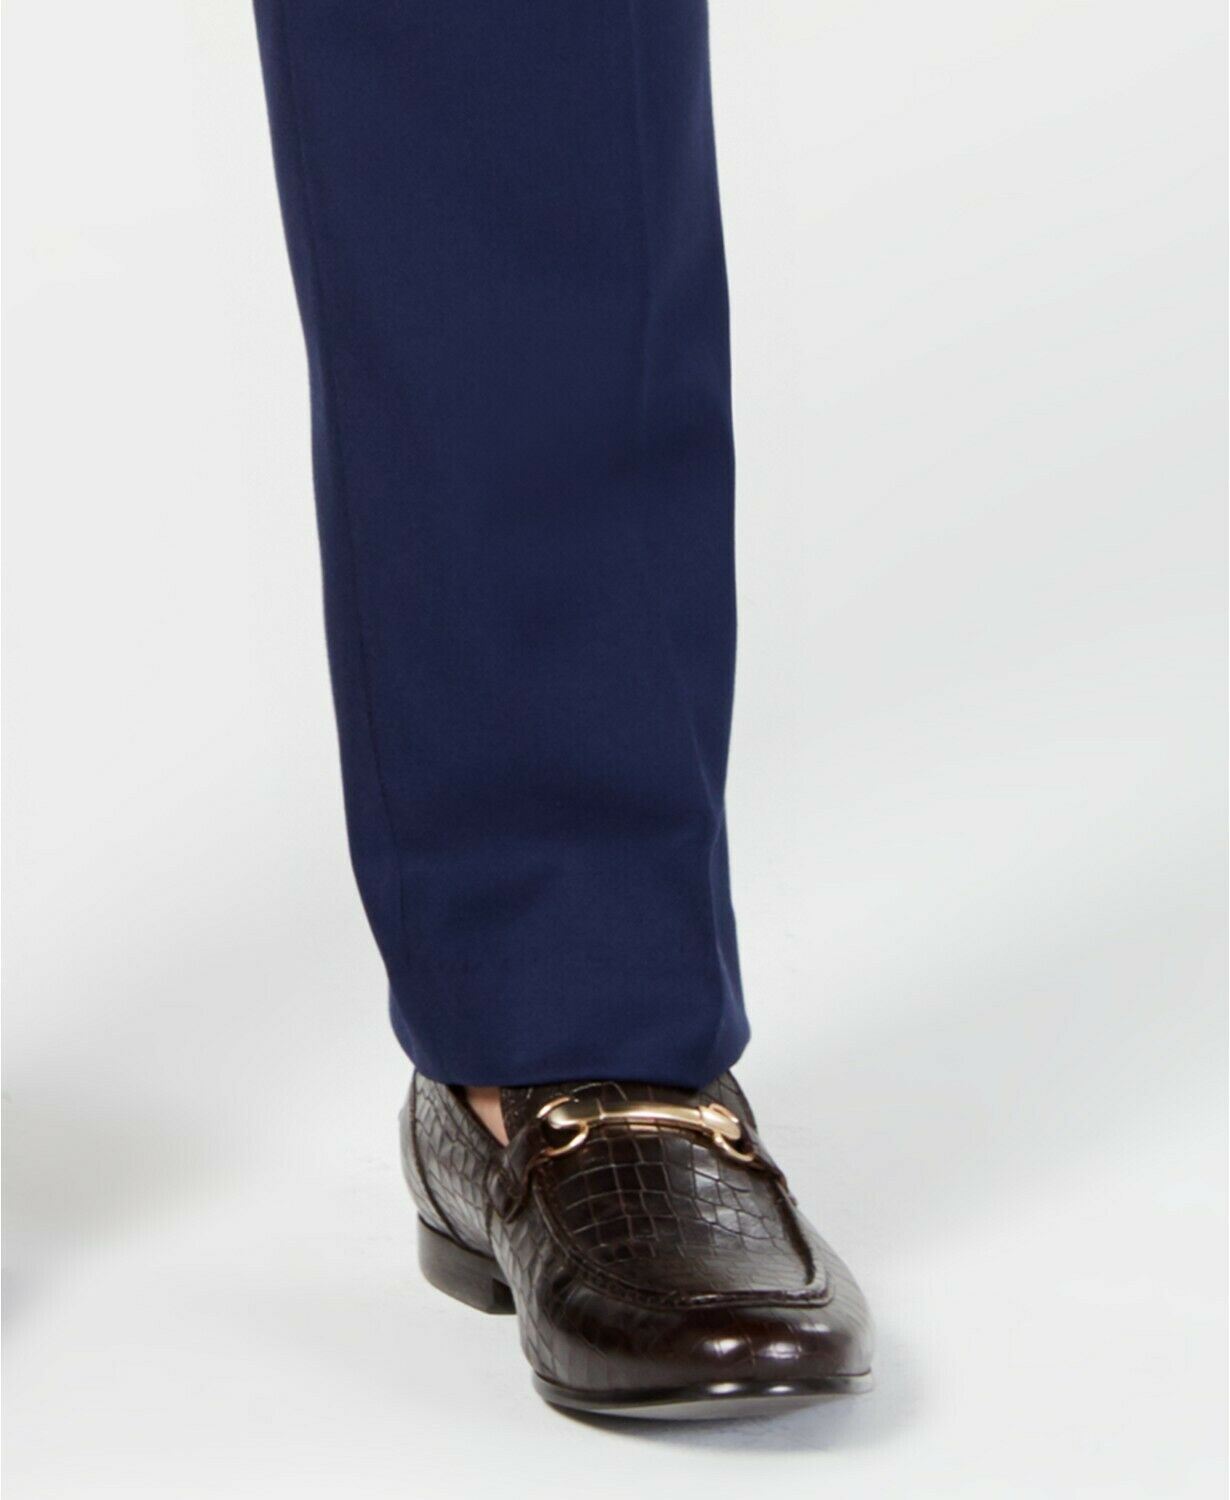 Perry Ellis Men's Portfolio Slim-Fit Stretch Navy Solid Dress Pants 36 x 32